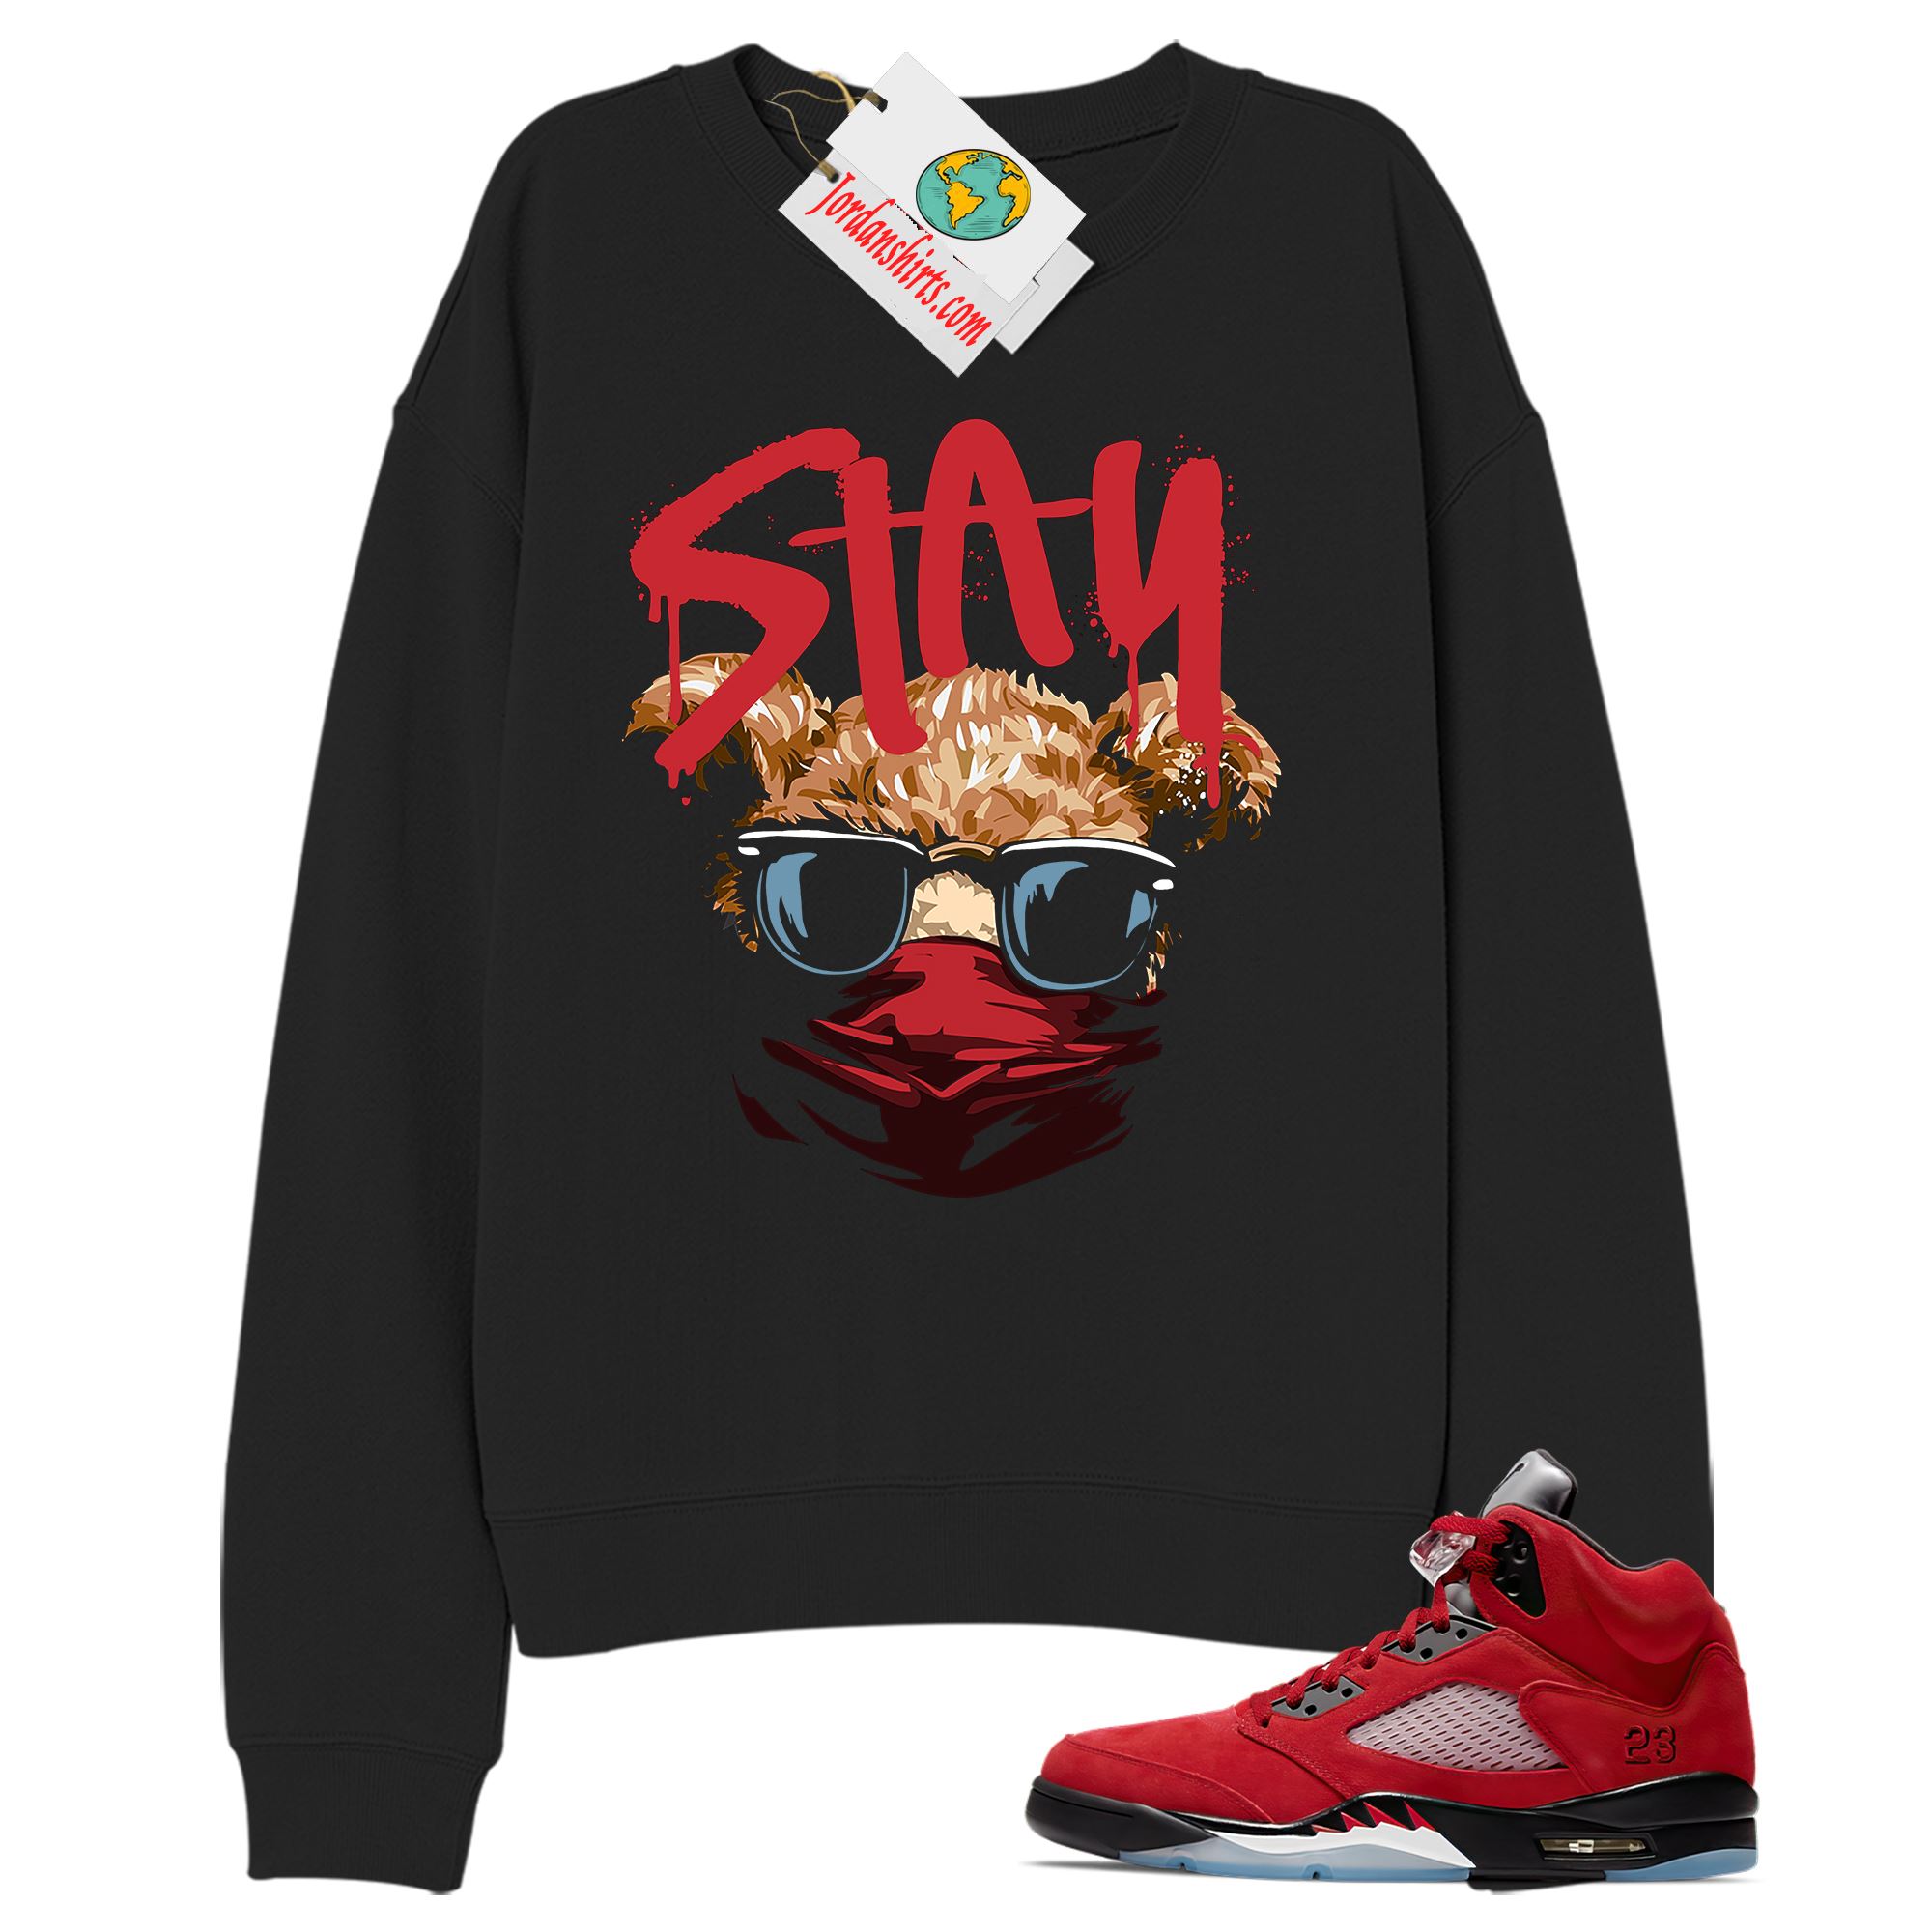 Jordan 5 Sweatshirt, Teddy Bear In Sunglasses Face Mask Black Sweatshirt Air Jordan 5 Raging Bull 5s Size Up To 5xl